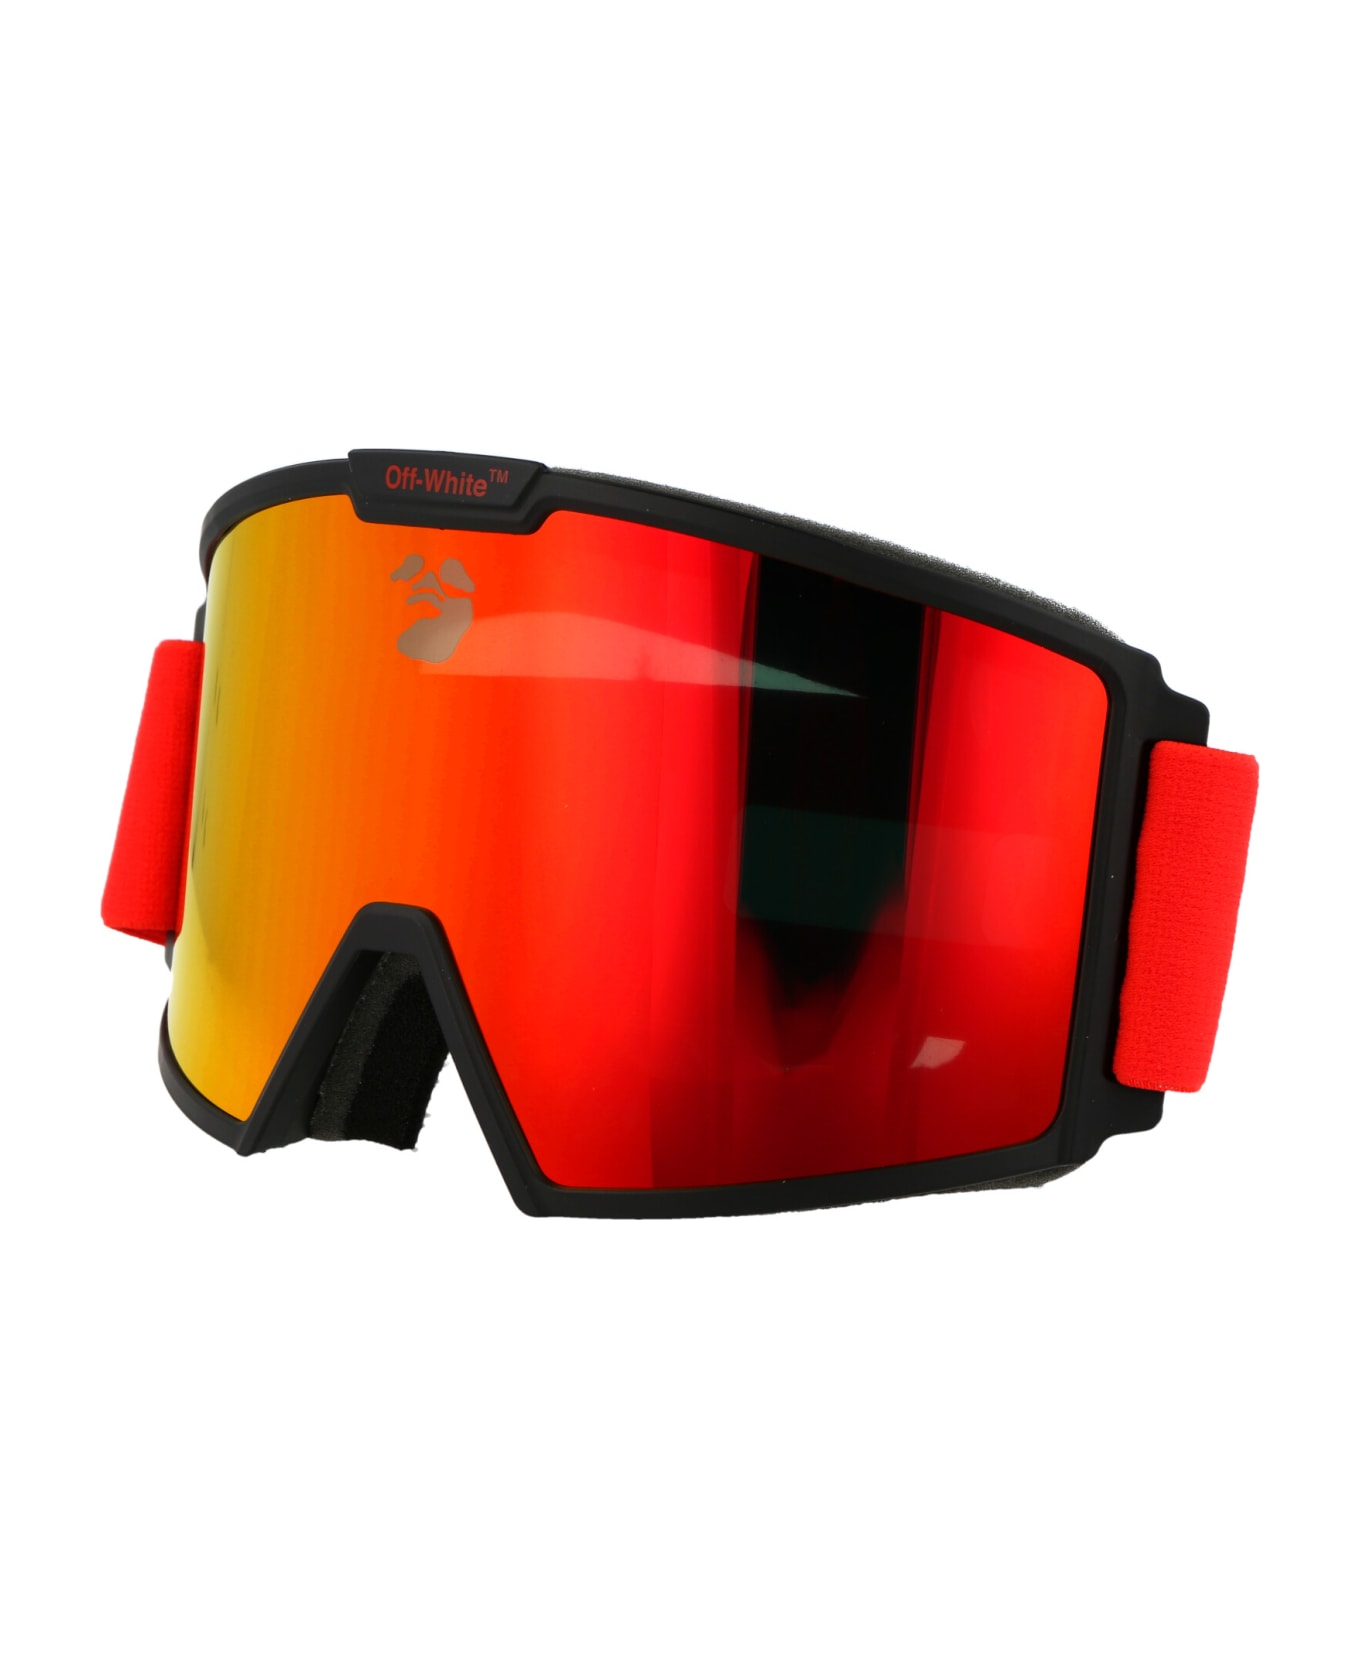 Off-White Ski Goggle Sunglasses item - 2525 RED